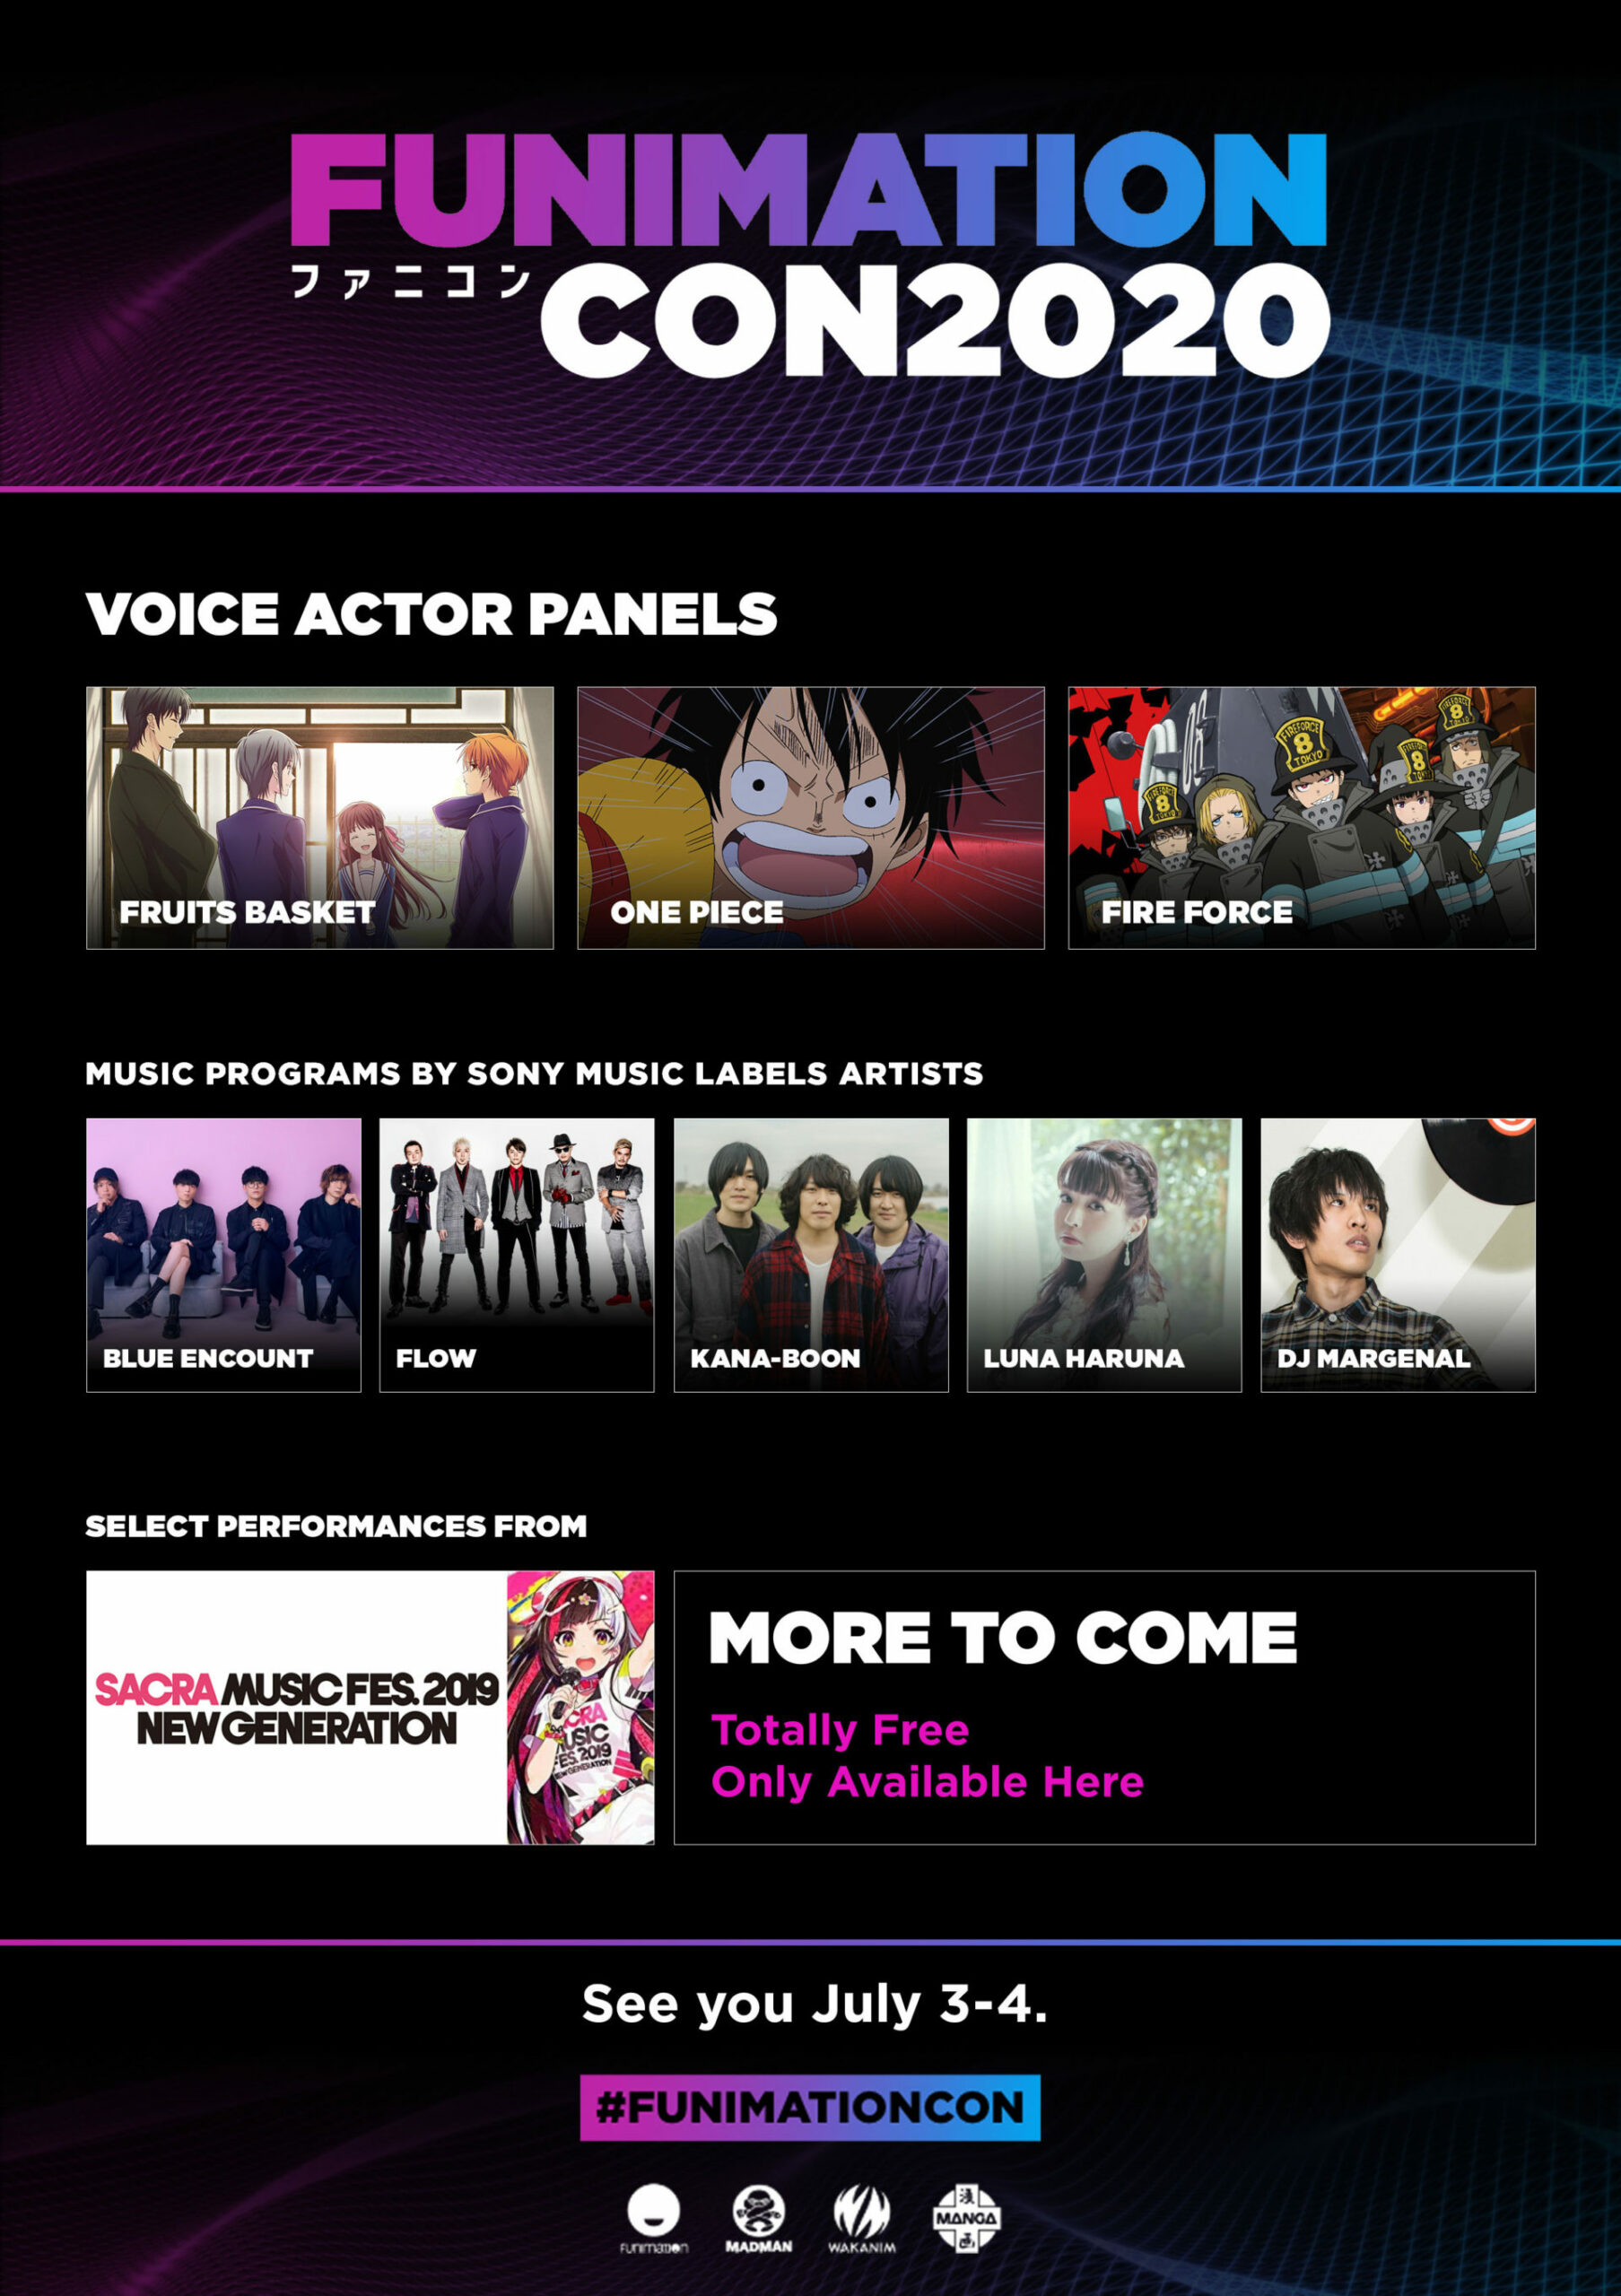 Shonen Jump Hosts Panel In FunimationCon 2020